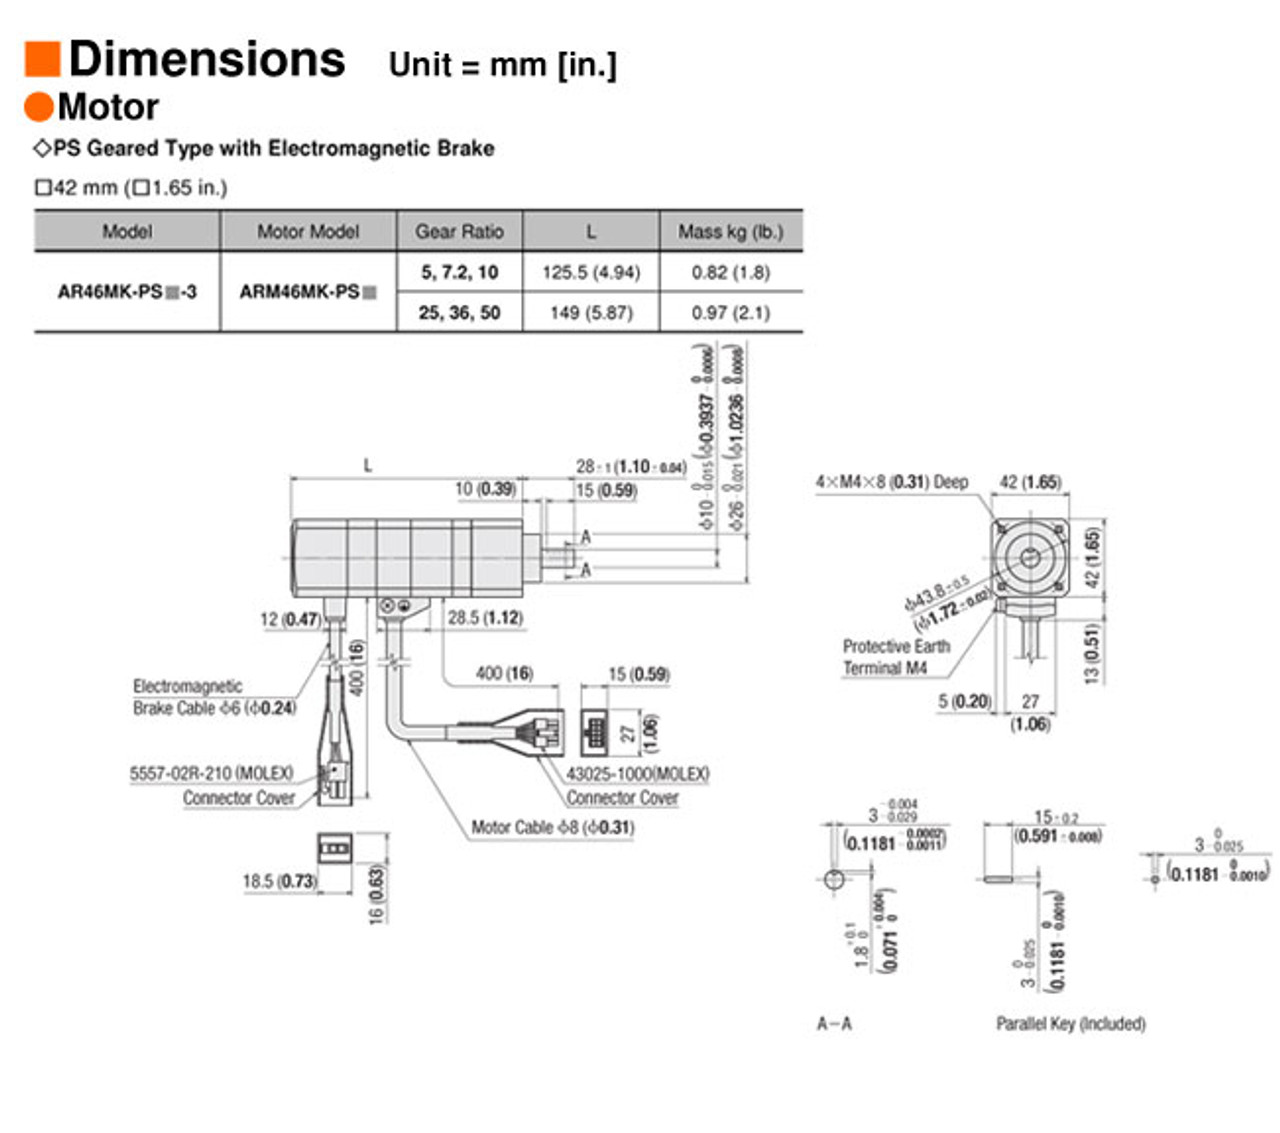 ARM46MK-PS25 - Dimensions